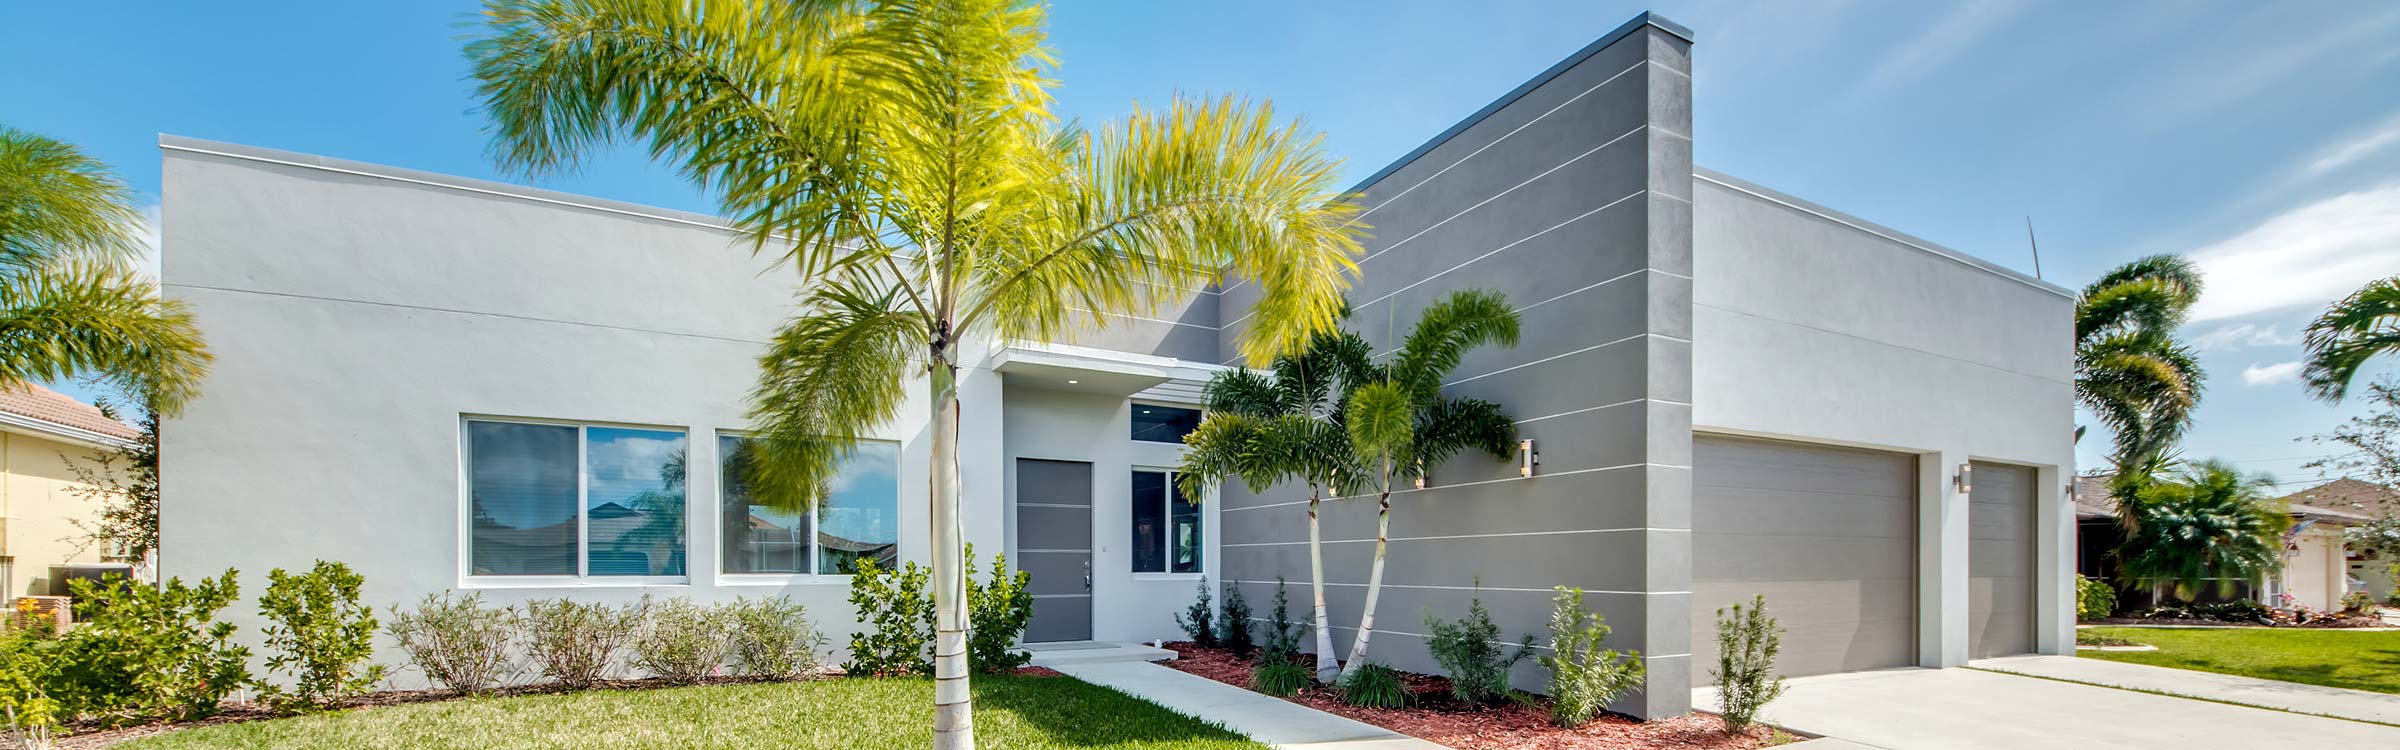 Hausbau Florida - Neubau Immobilie Cape Coral, Fort Myers